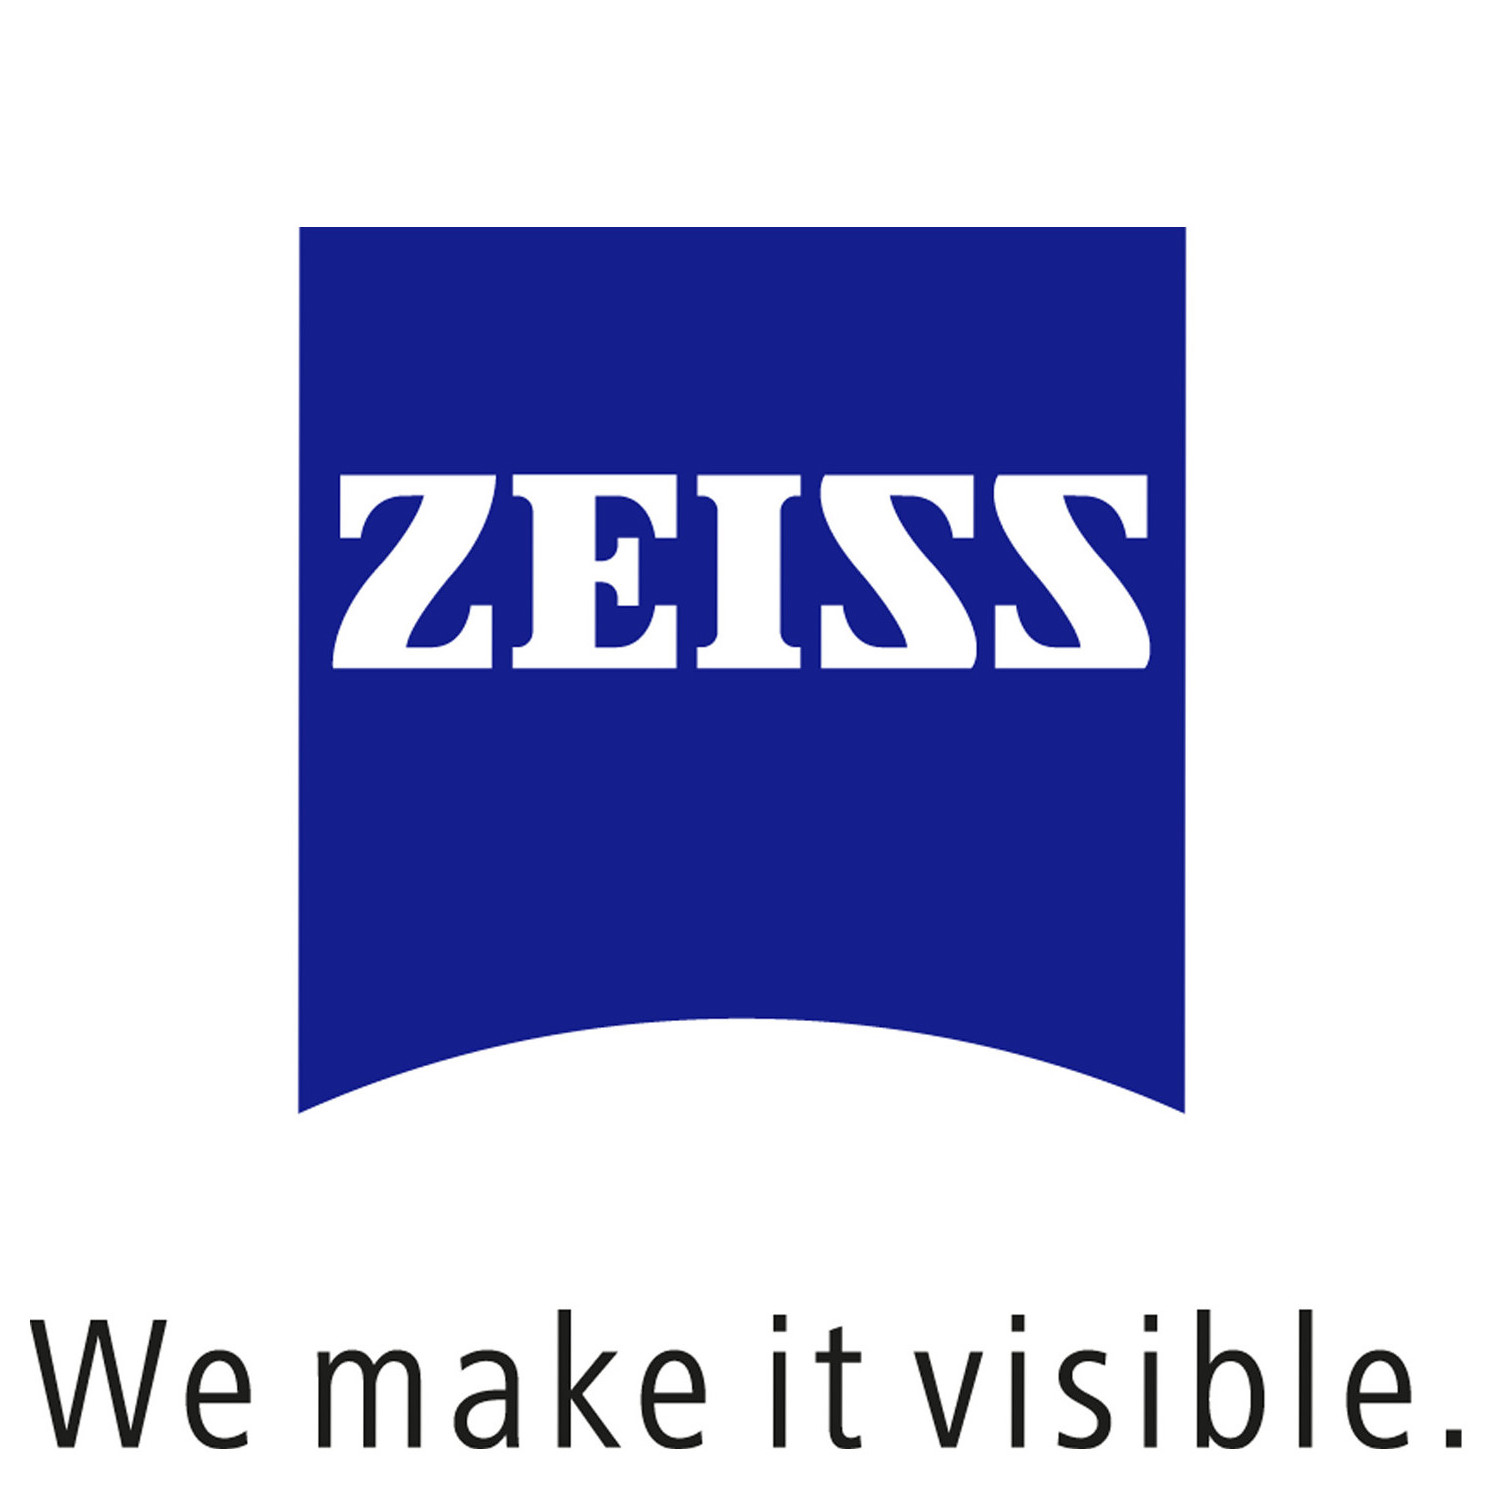 2018-01/1515680128_zeiss_logo.jpg